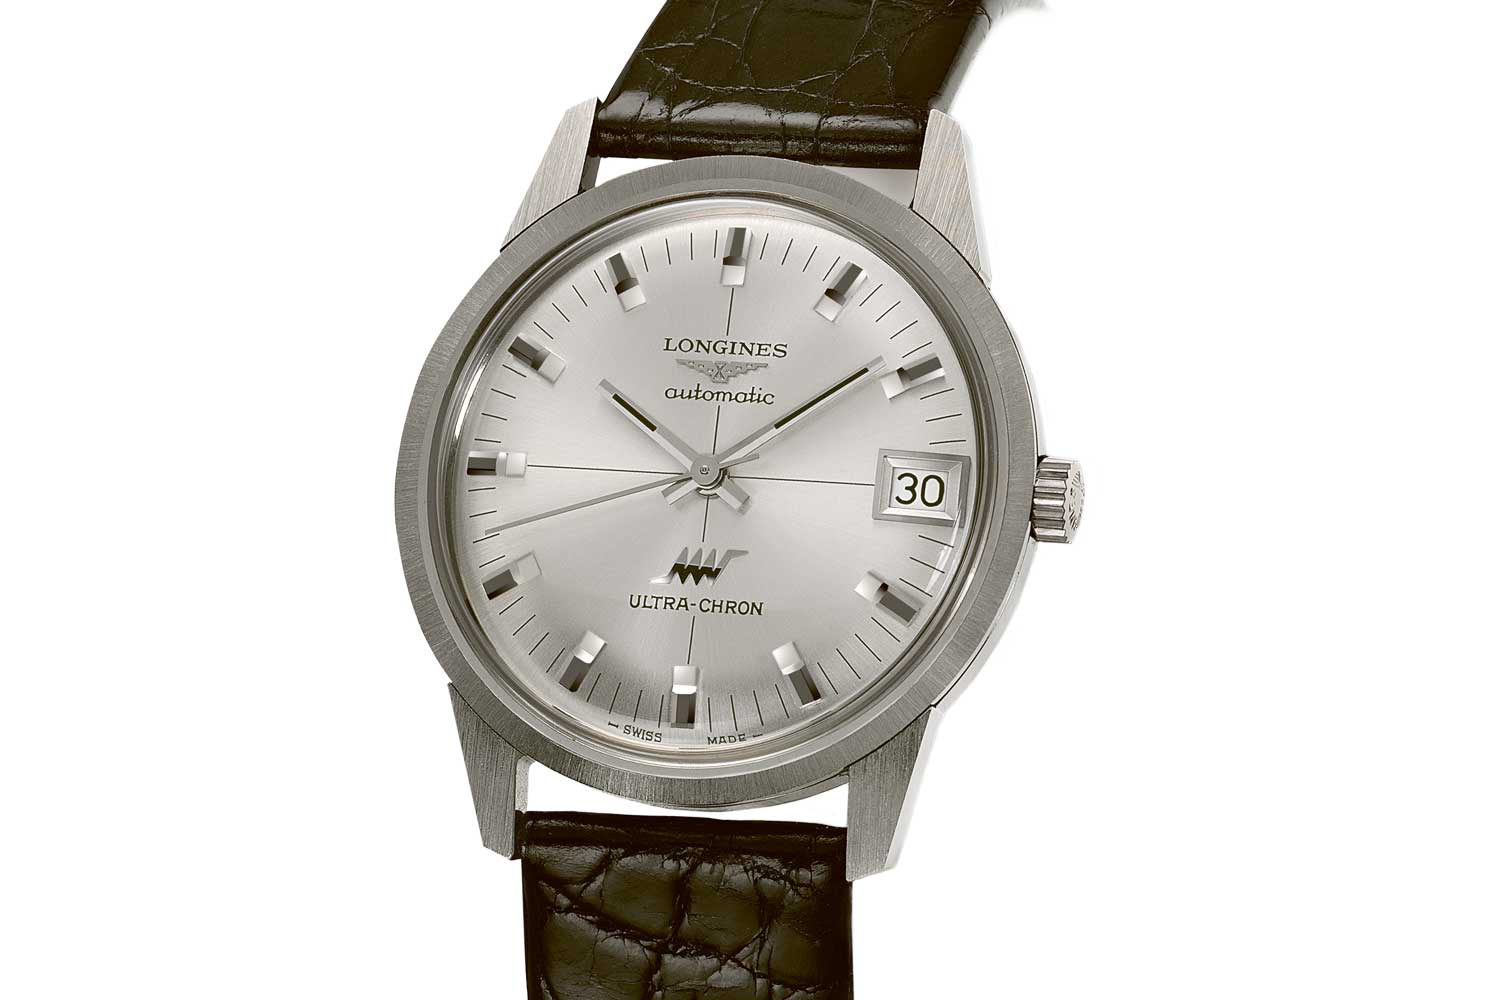 1966 — Ultra- Chron, the accurate high-beat wristwatch (Caliber 431)